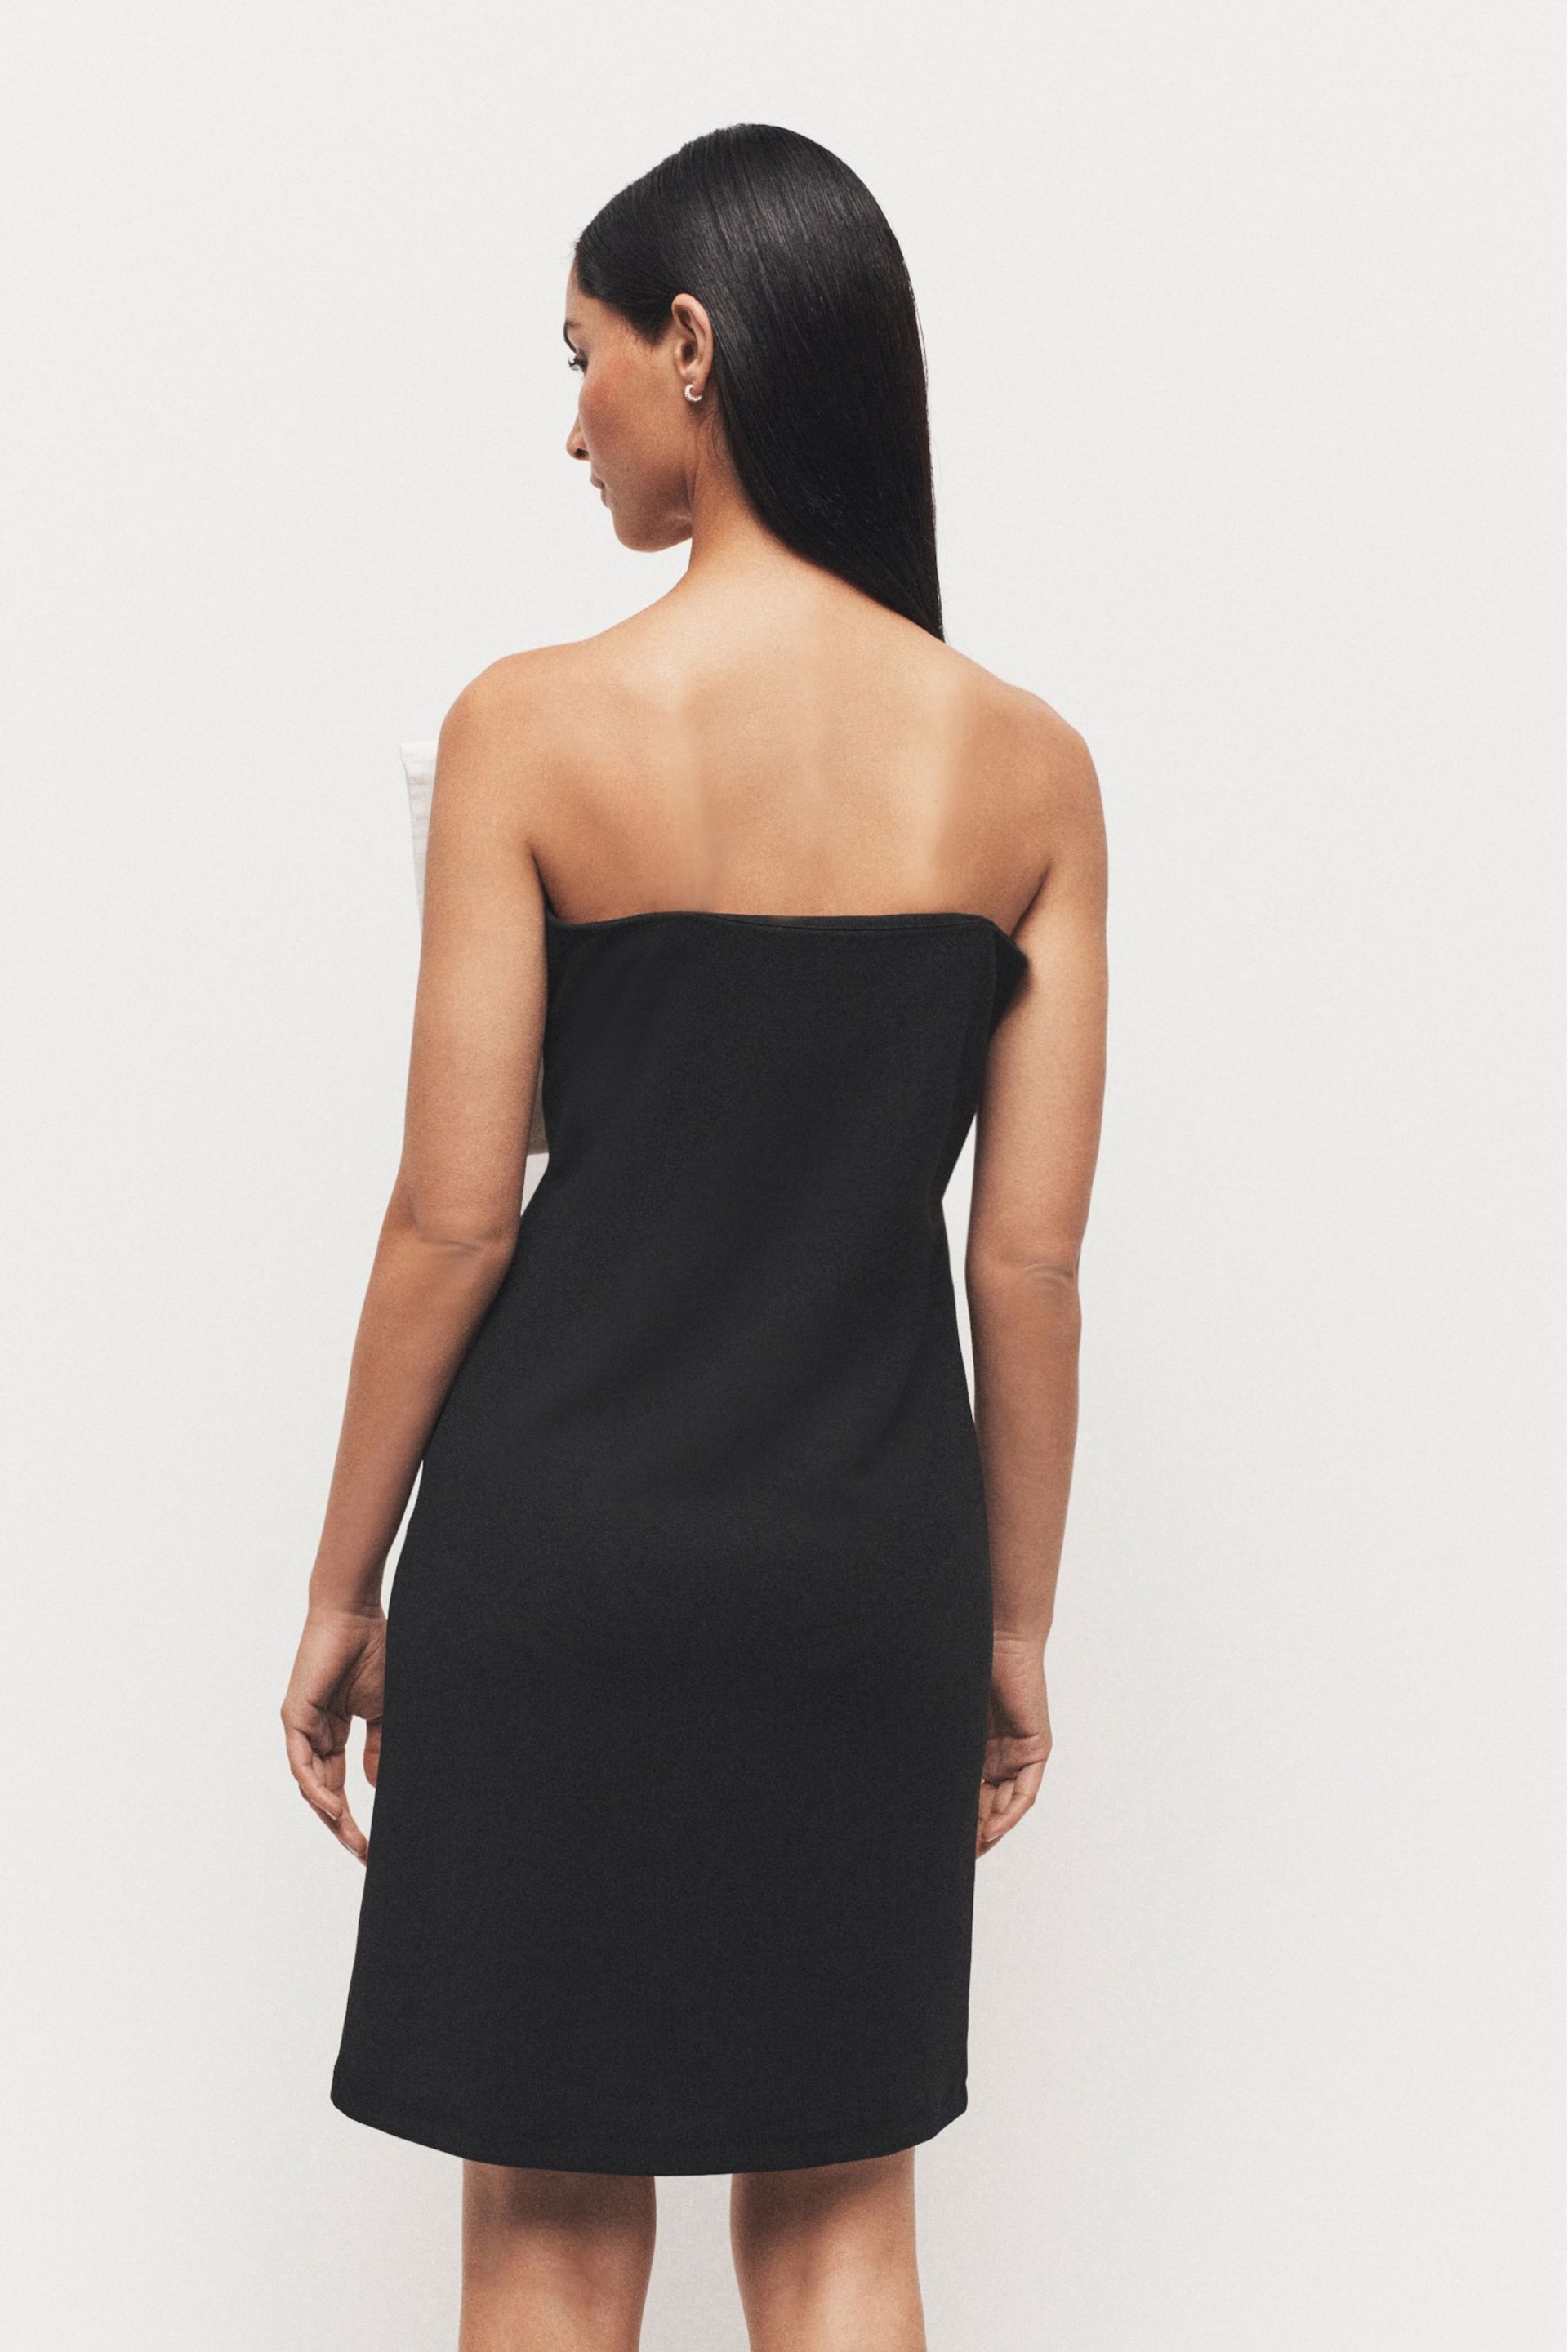 Black Bow Bandeau Mini Dress - Image 3 of 7